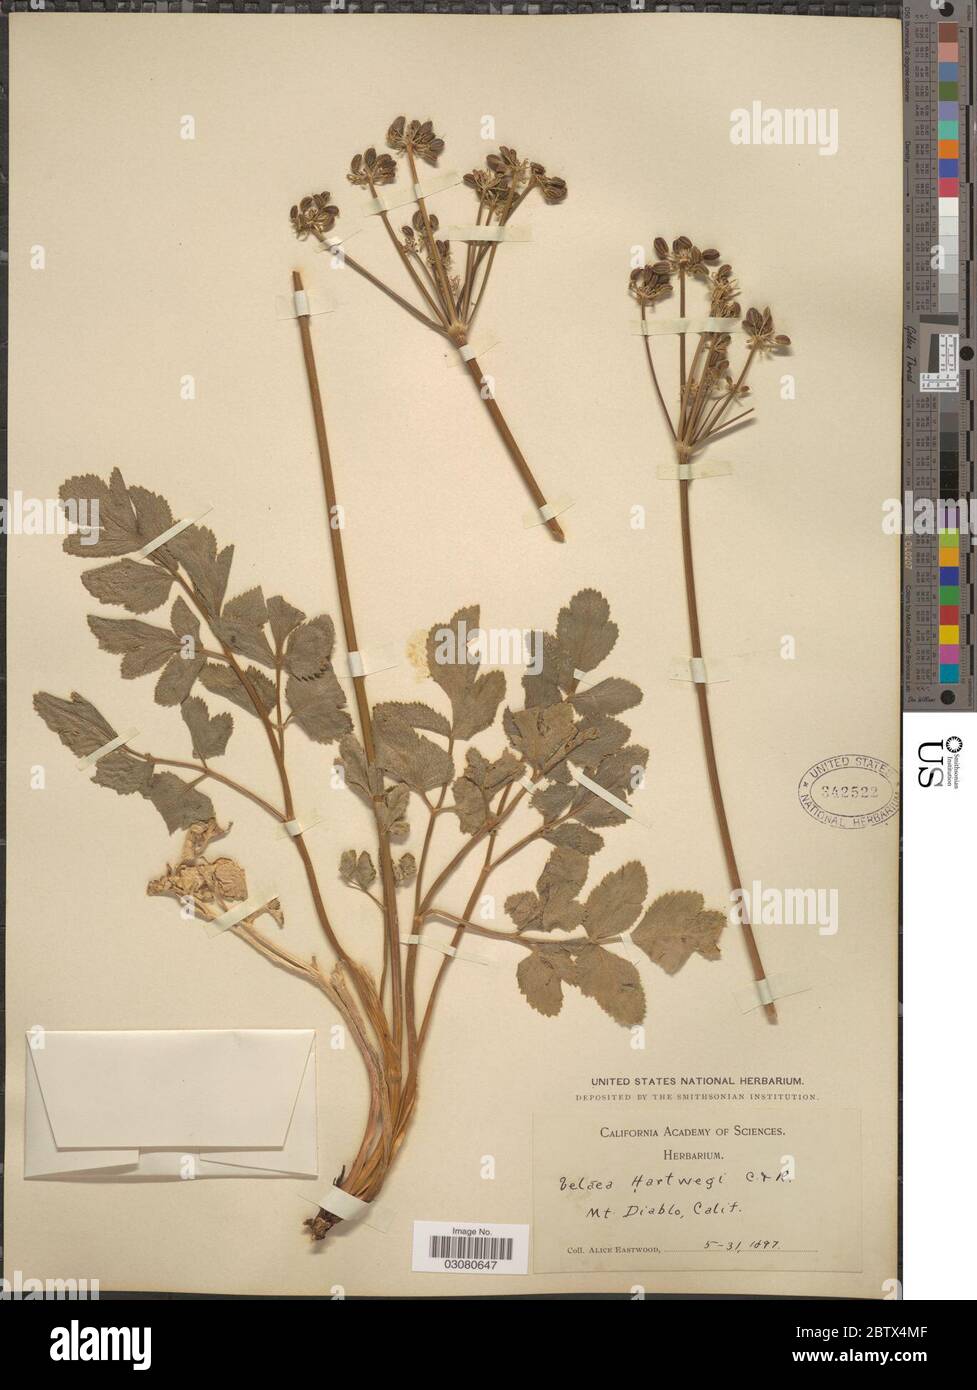 Drudeophytum hartwegii A Gray JM Coult Rose. Stock Photo